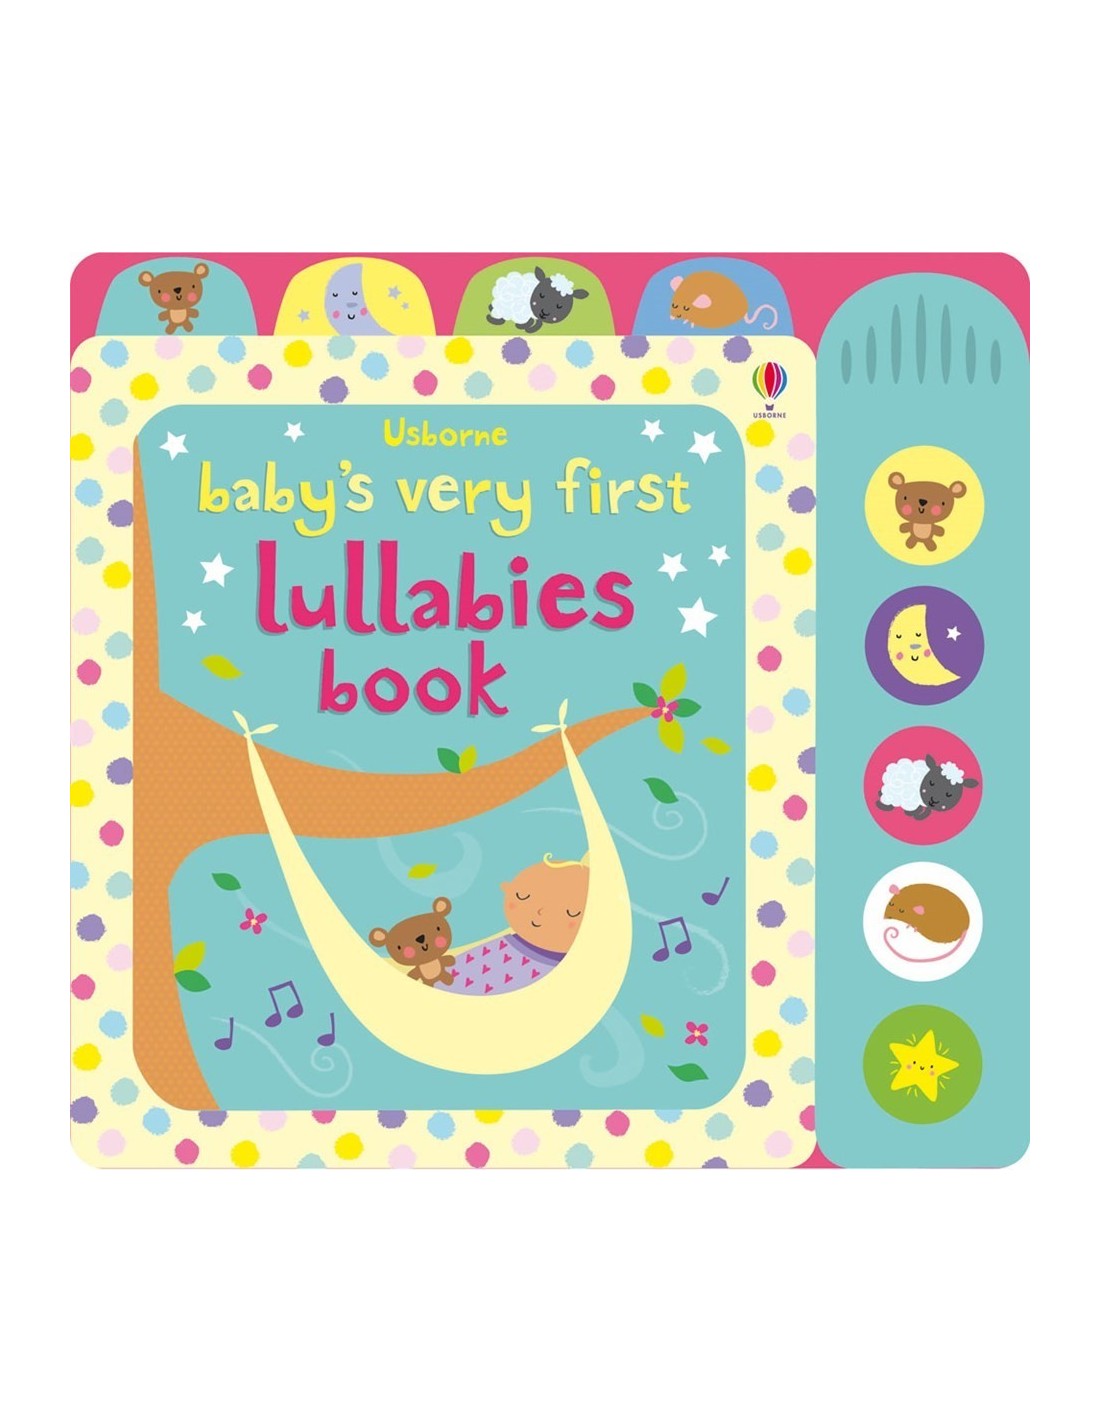 Baby's very first lullabies book